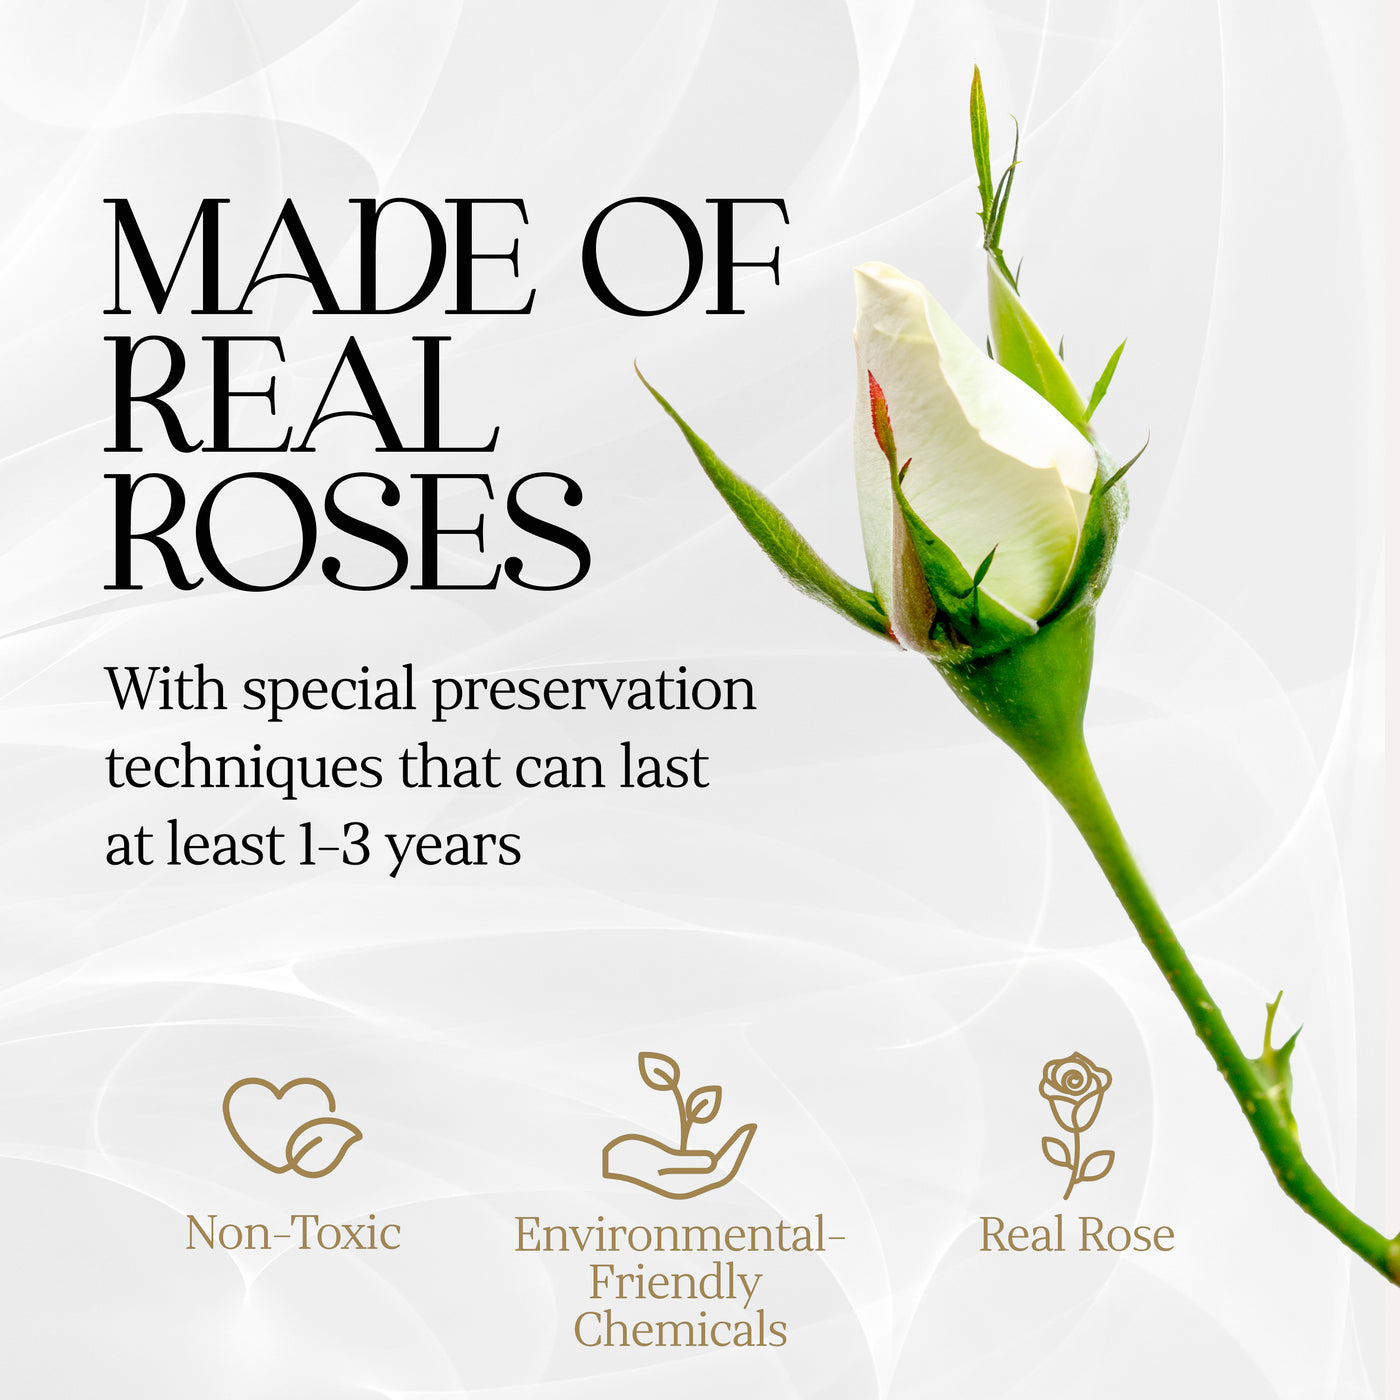 Immortal Love Heart Box | 7 White Roses